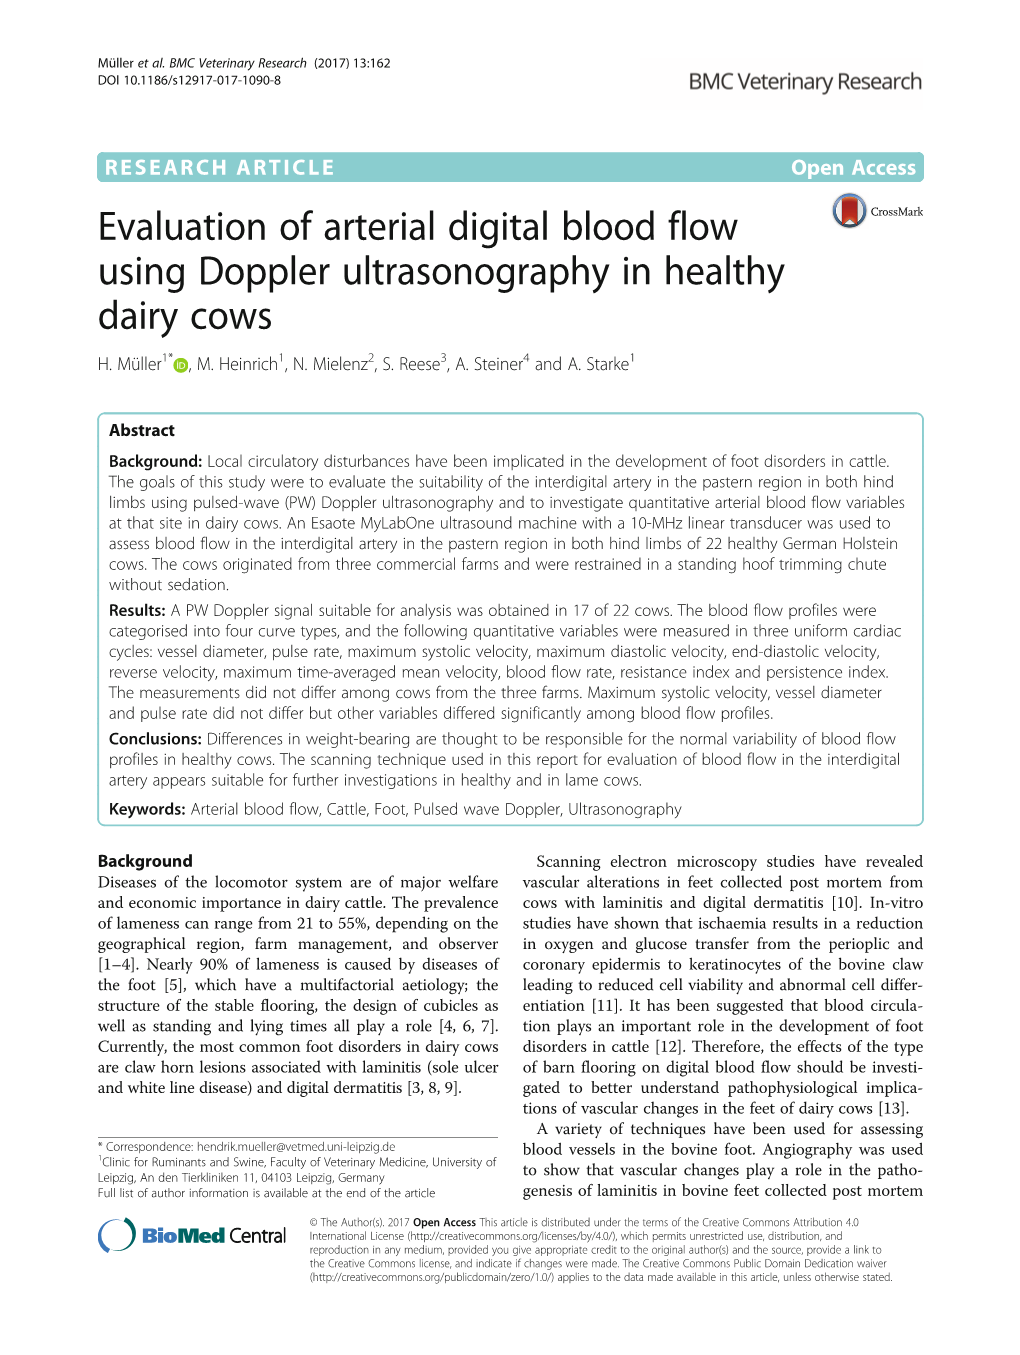 Evaluation of Arterial Digital Blood Flow Using Doppler Ultrasonography in Healthy Dairy Cows H